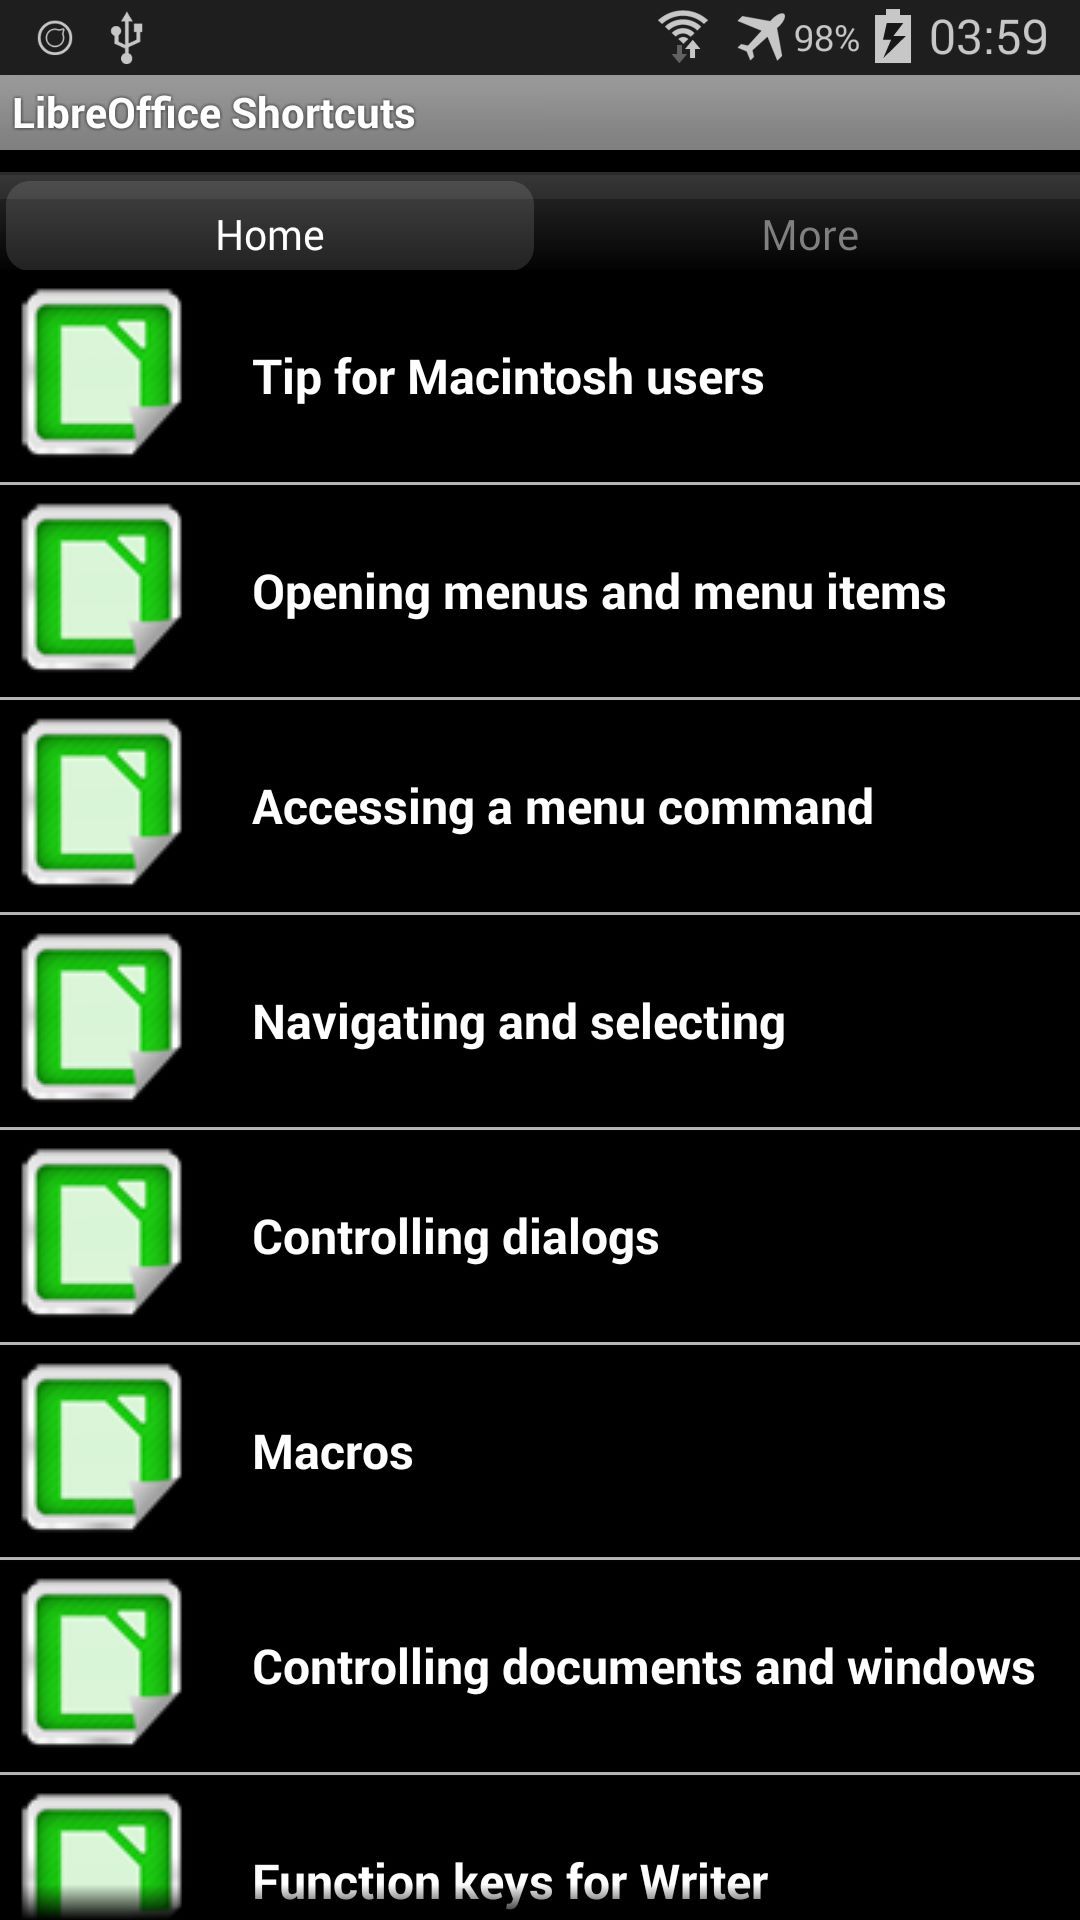 LibreOffice Shortcuts